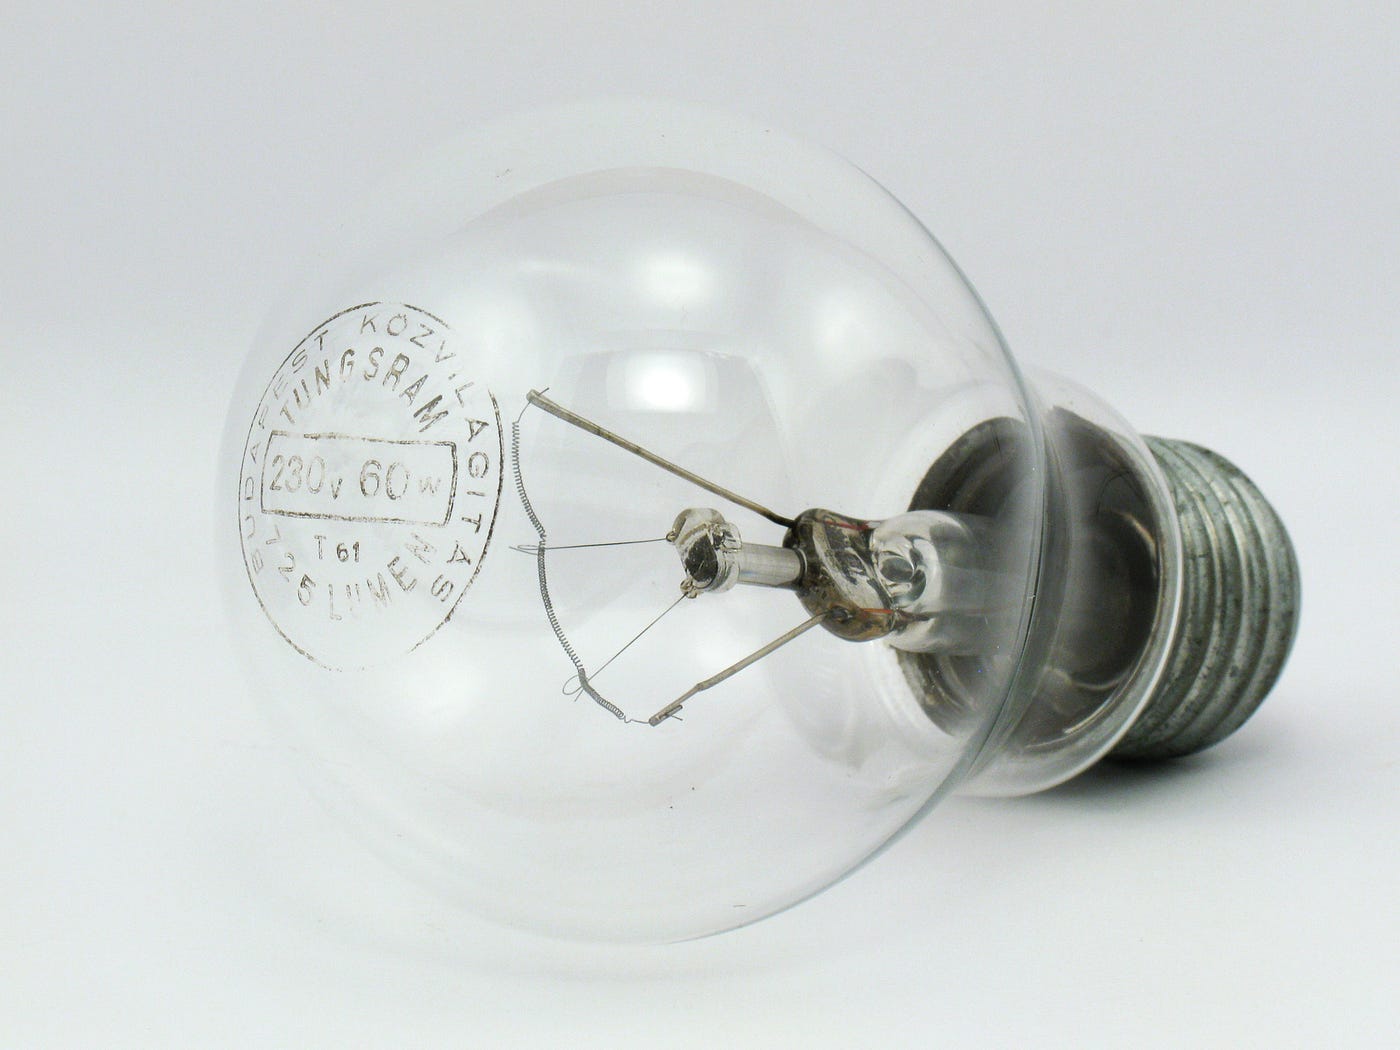 5 Different Types of Light Bulbs. The light bulbs have been illuminating… |  by Eileen Garcia | Medium